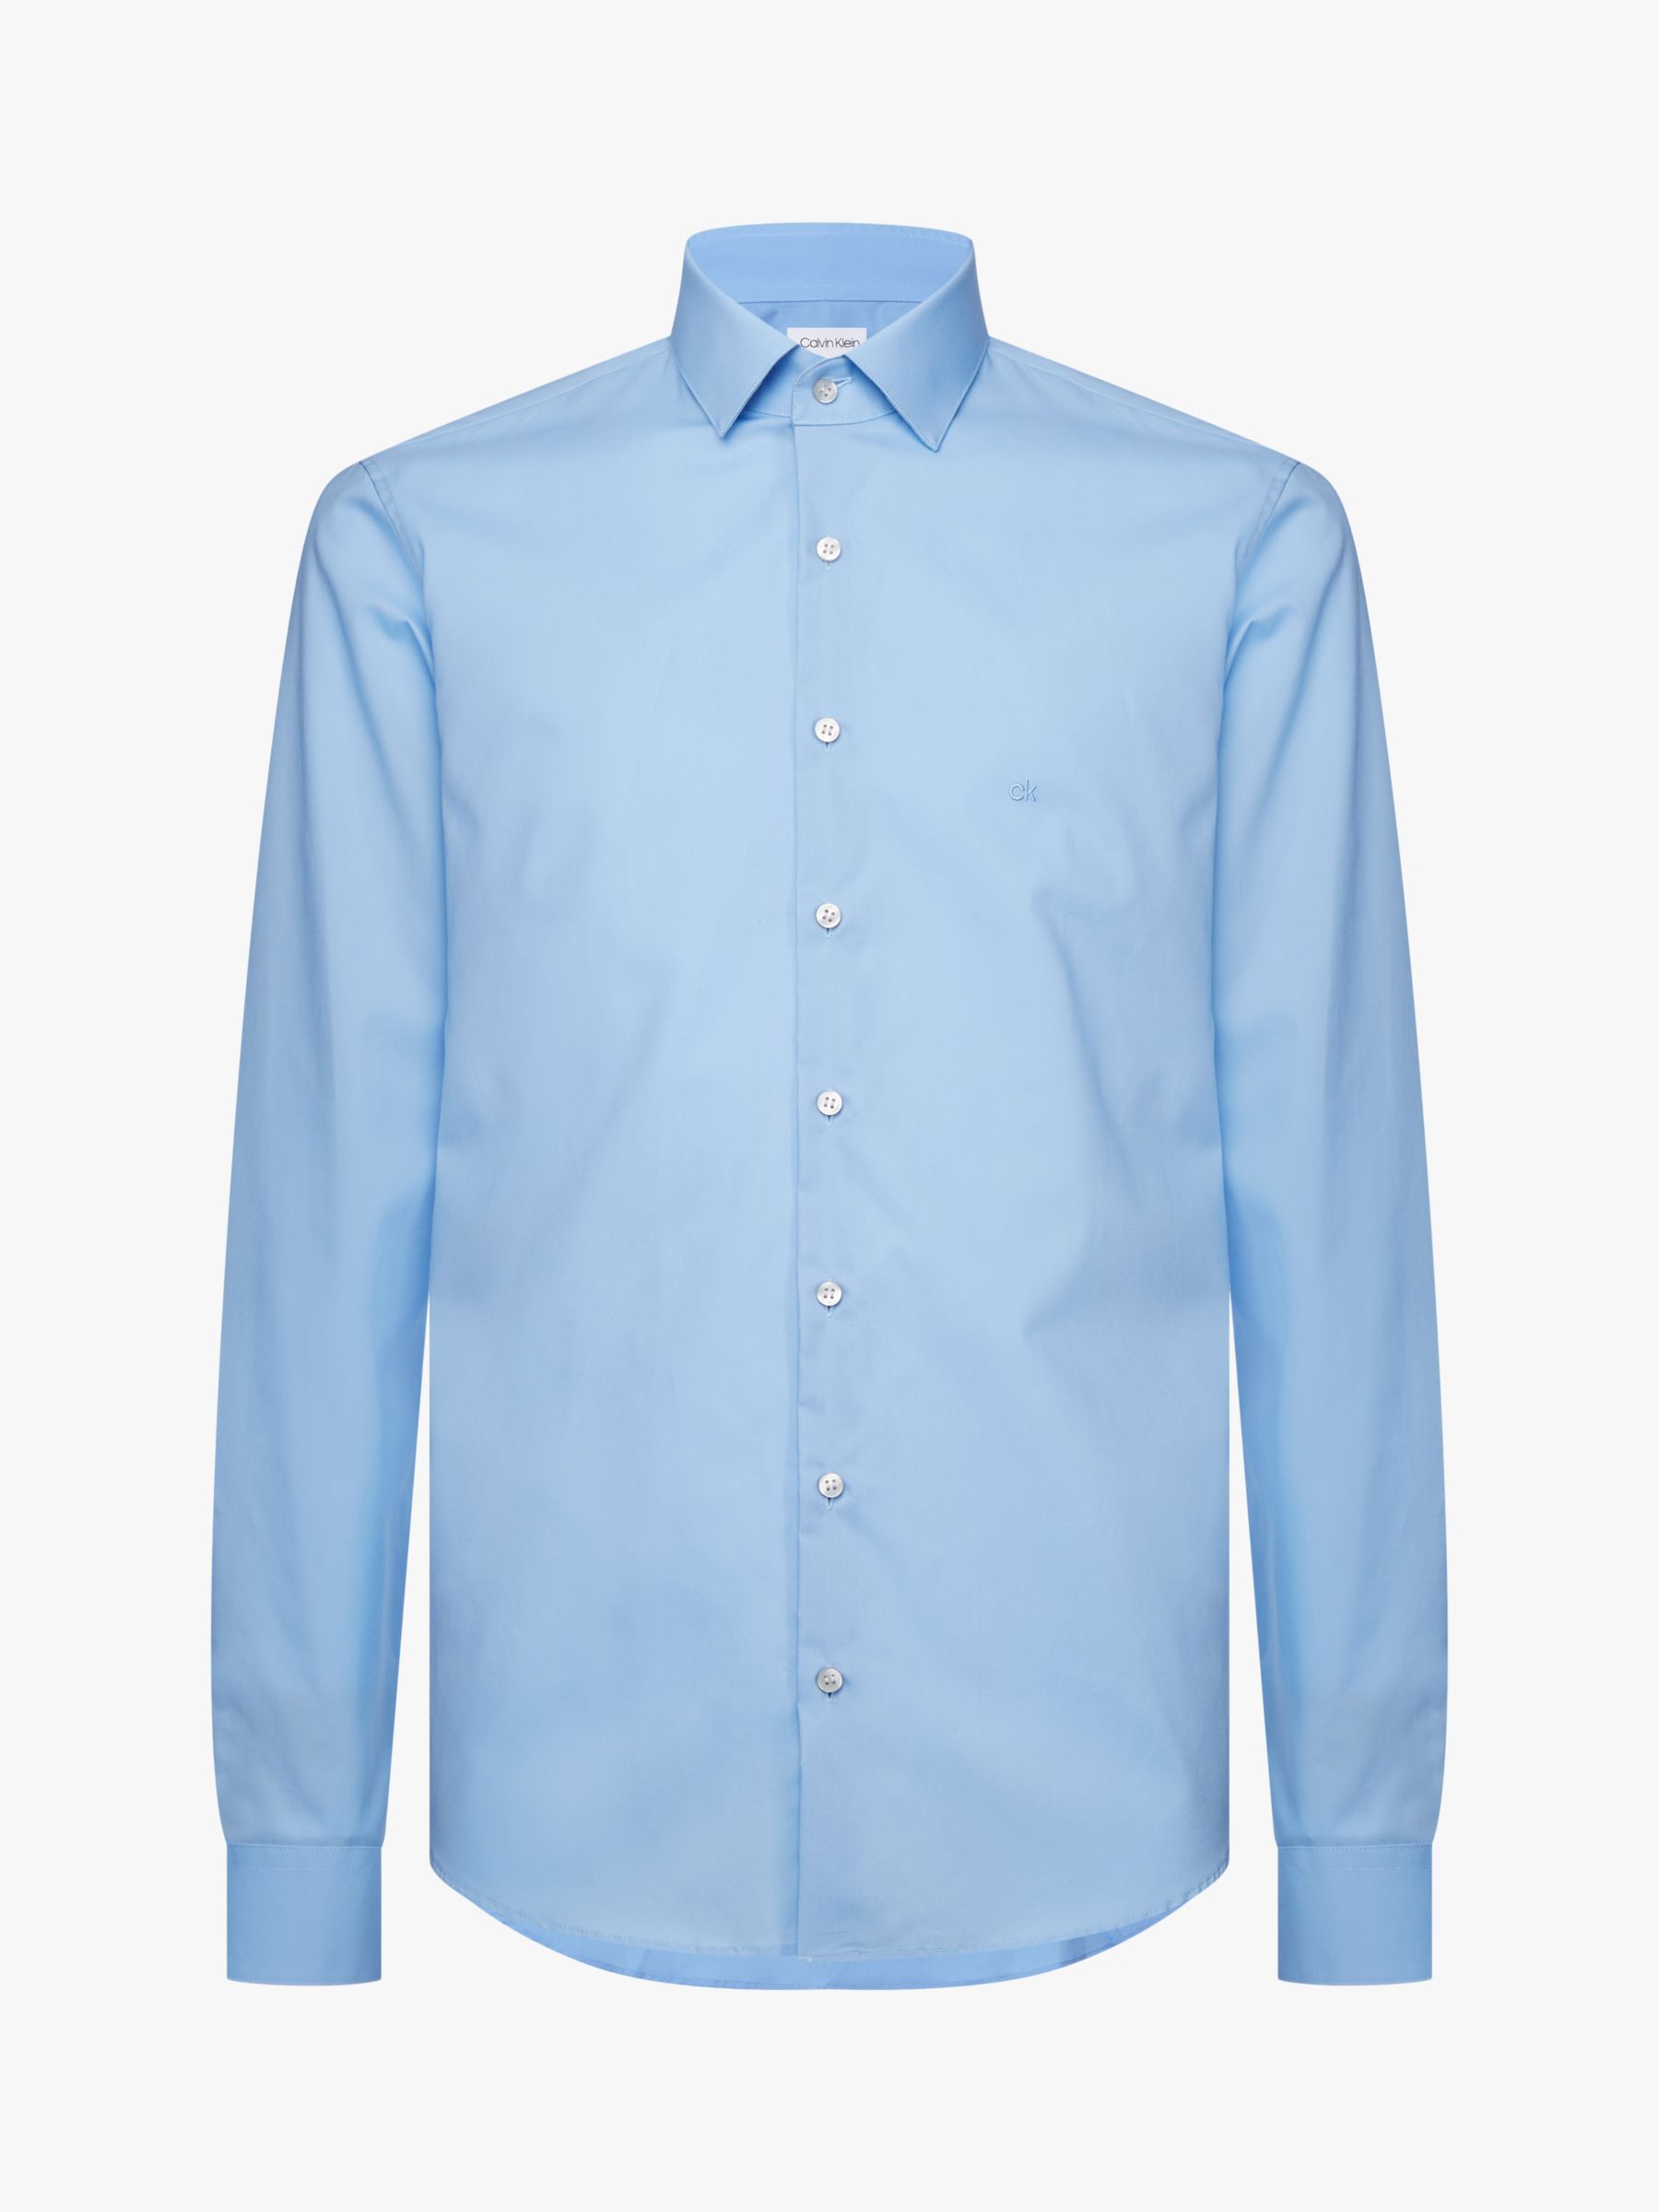 Calvin Klein Poplin Slim Fit Shirt, Light Blue at John Lewis & Partners